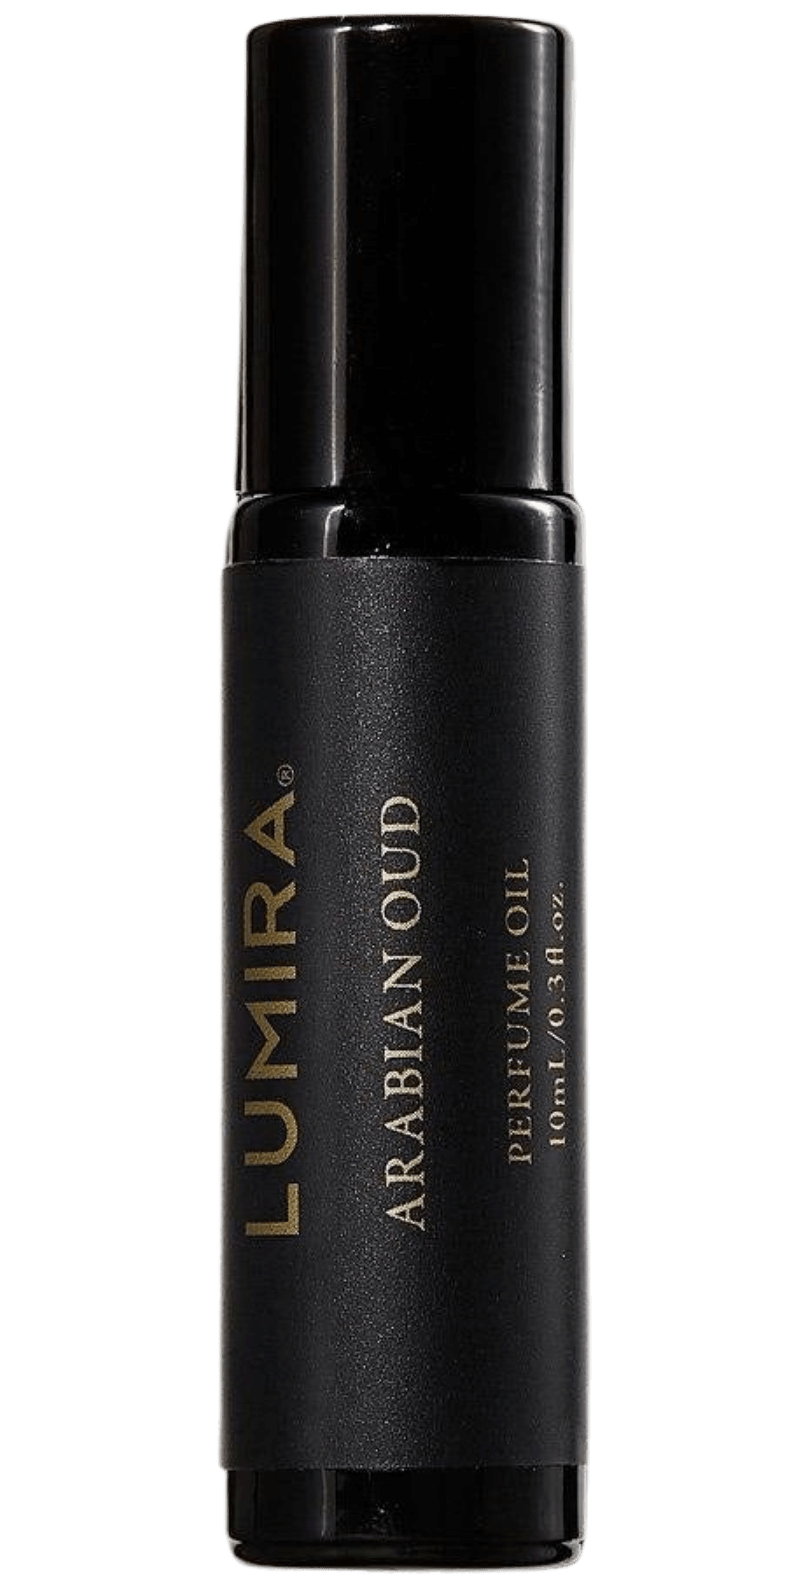 's Lumira Arabian Oud Perfume Oil - Bellini's Skin and Parfumerie 